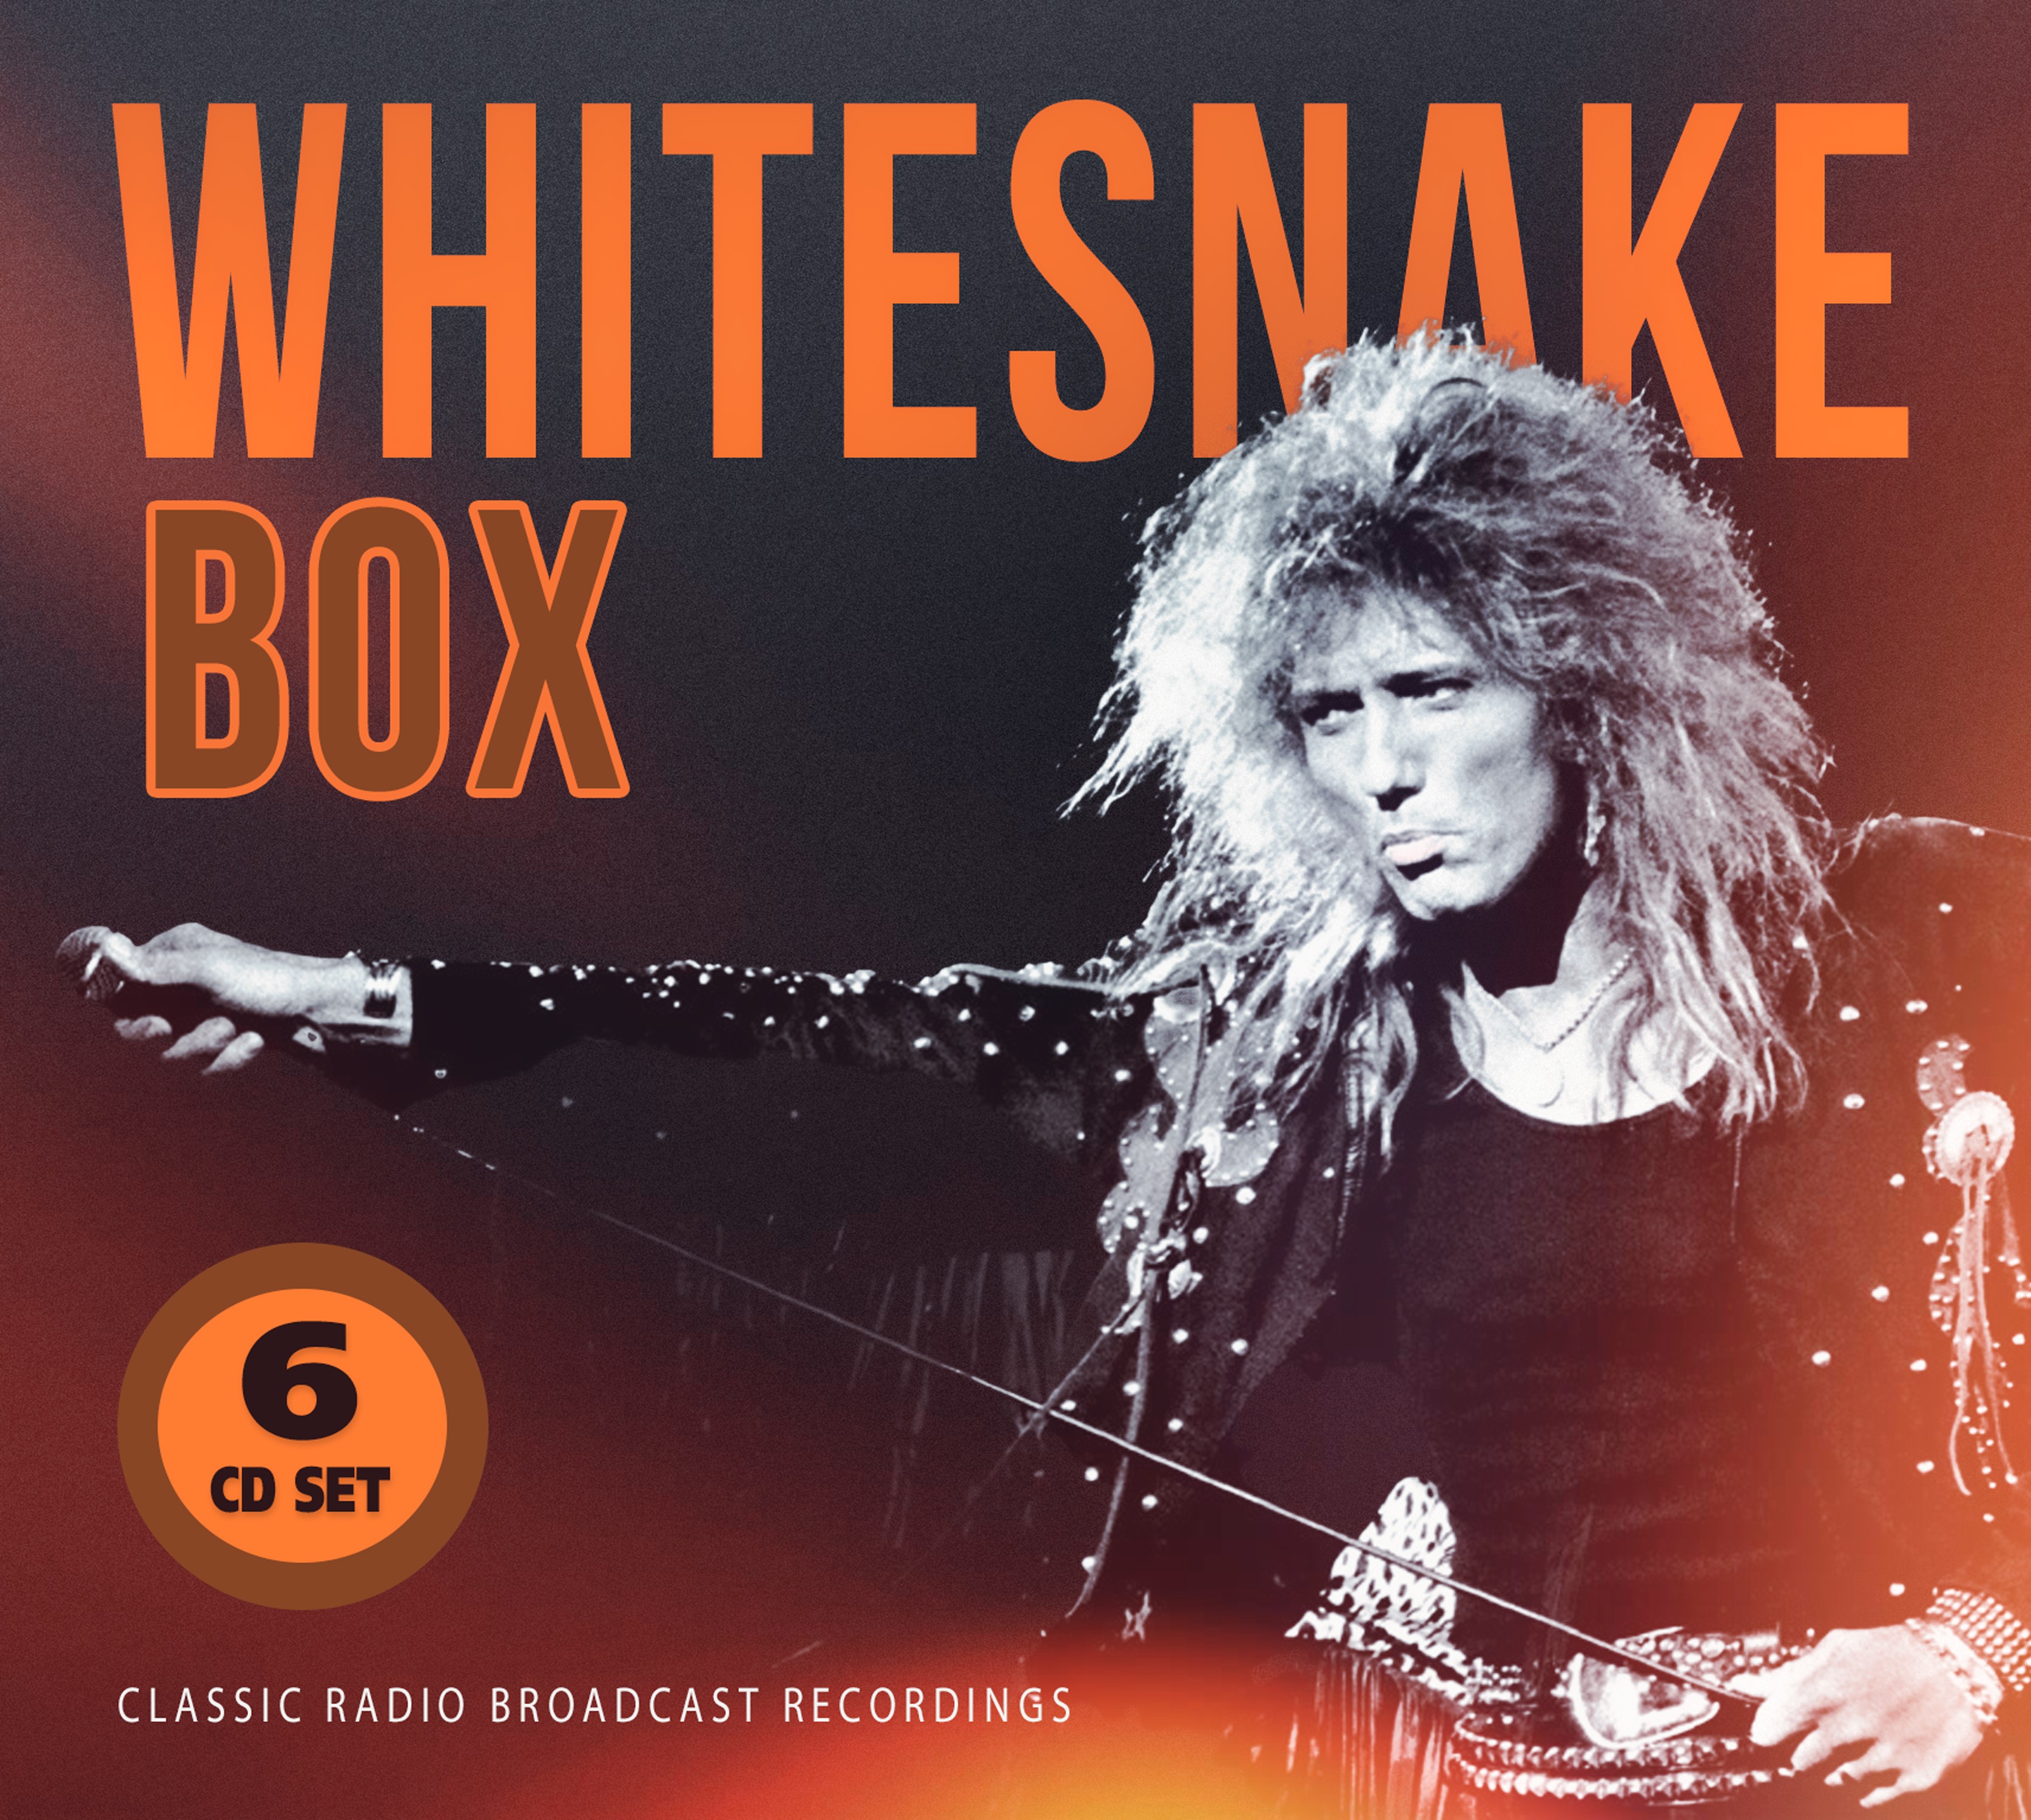 Whitesnake - Whitesnake Box